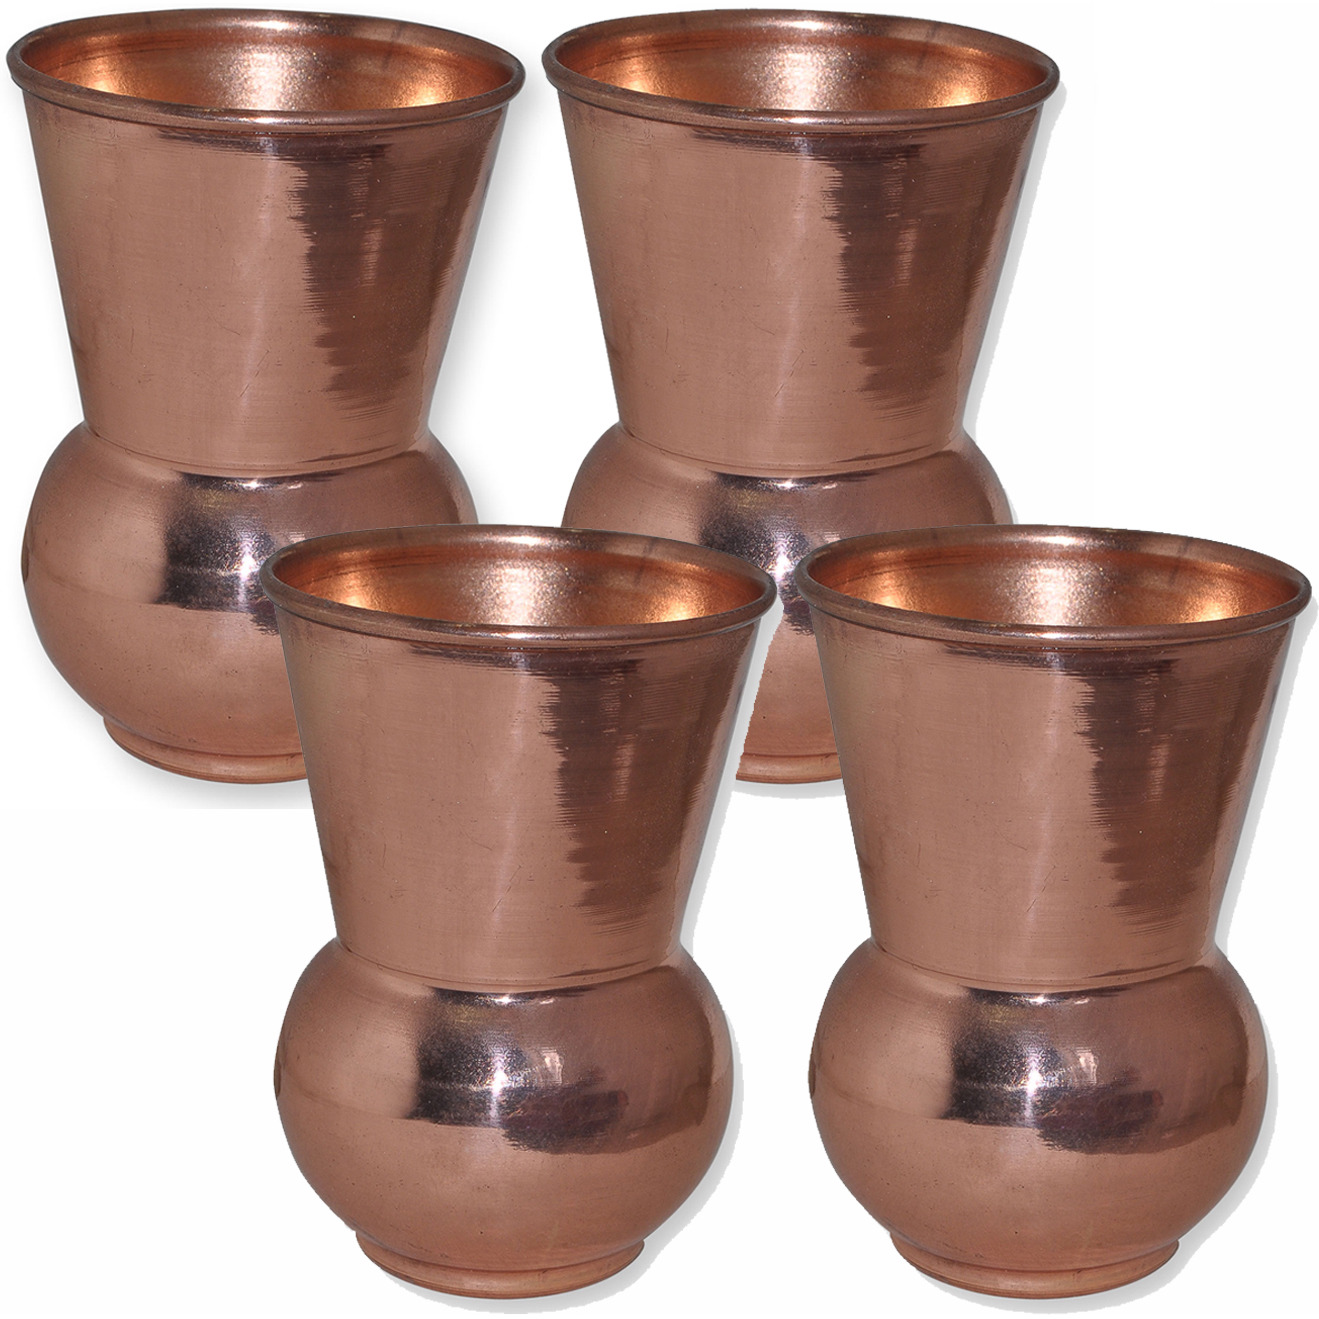 Set of 4 - Prisha India Craft B. Copper Muglai Matka Glass Drinkware Tumbler Handmade Copper Cup - Traveller's Copper Mug